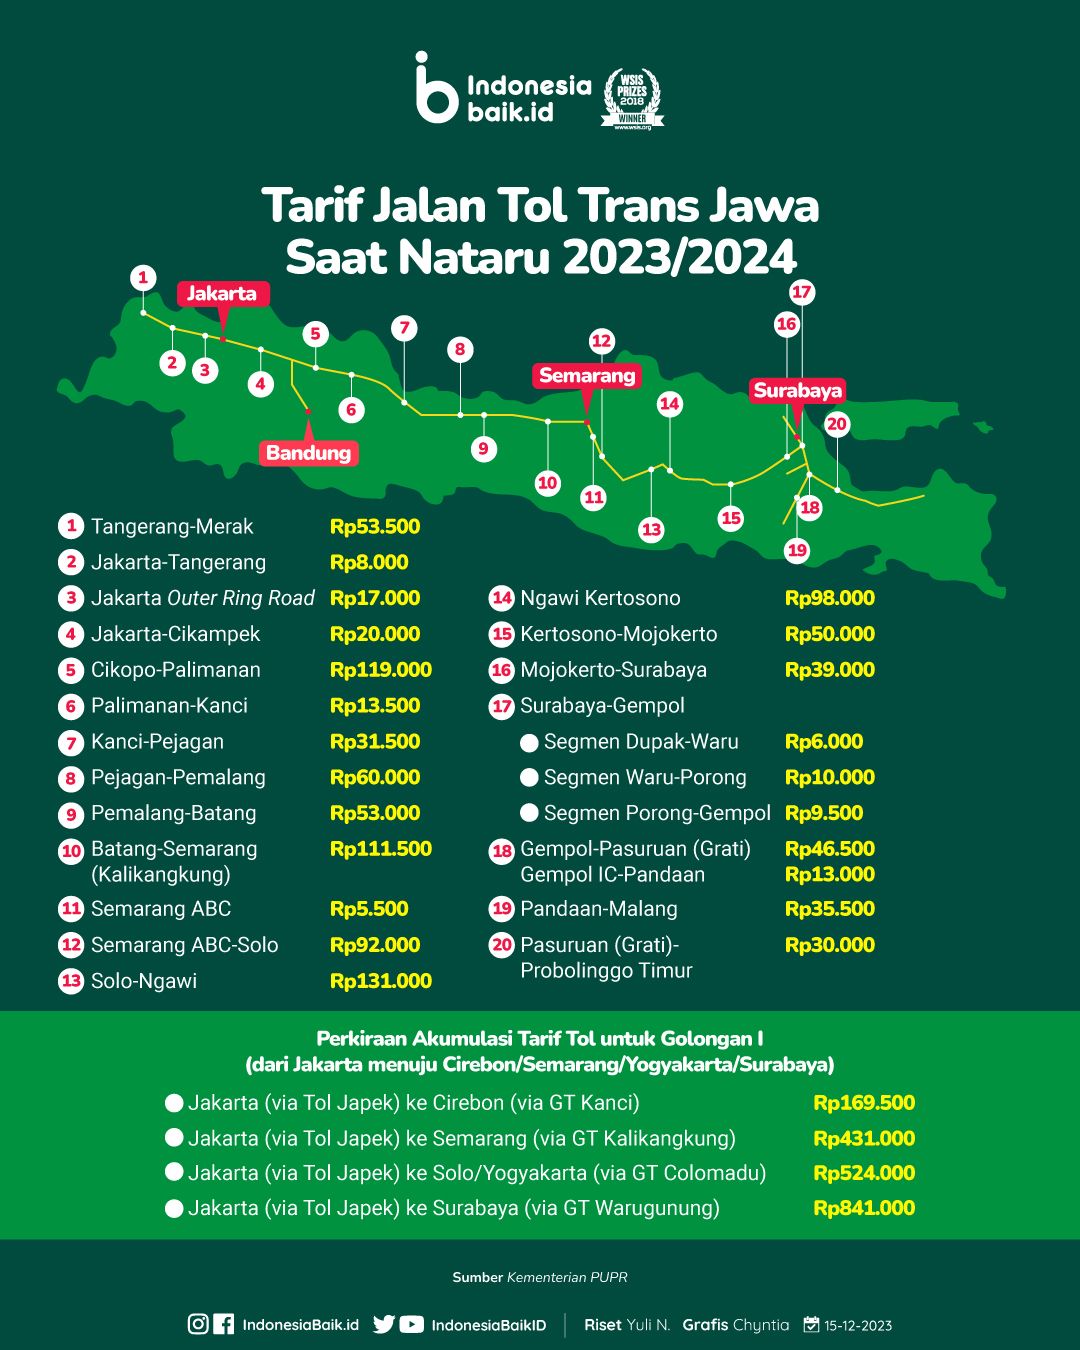 Daftar Lengkap Tarif Jalan Tol Trans Jawa Saat Nataru 2023/2024